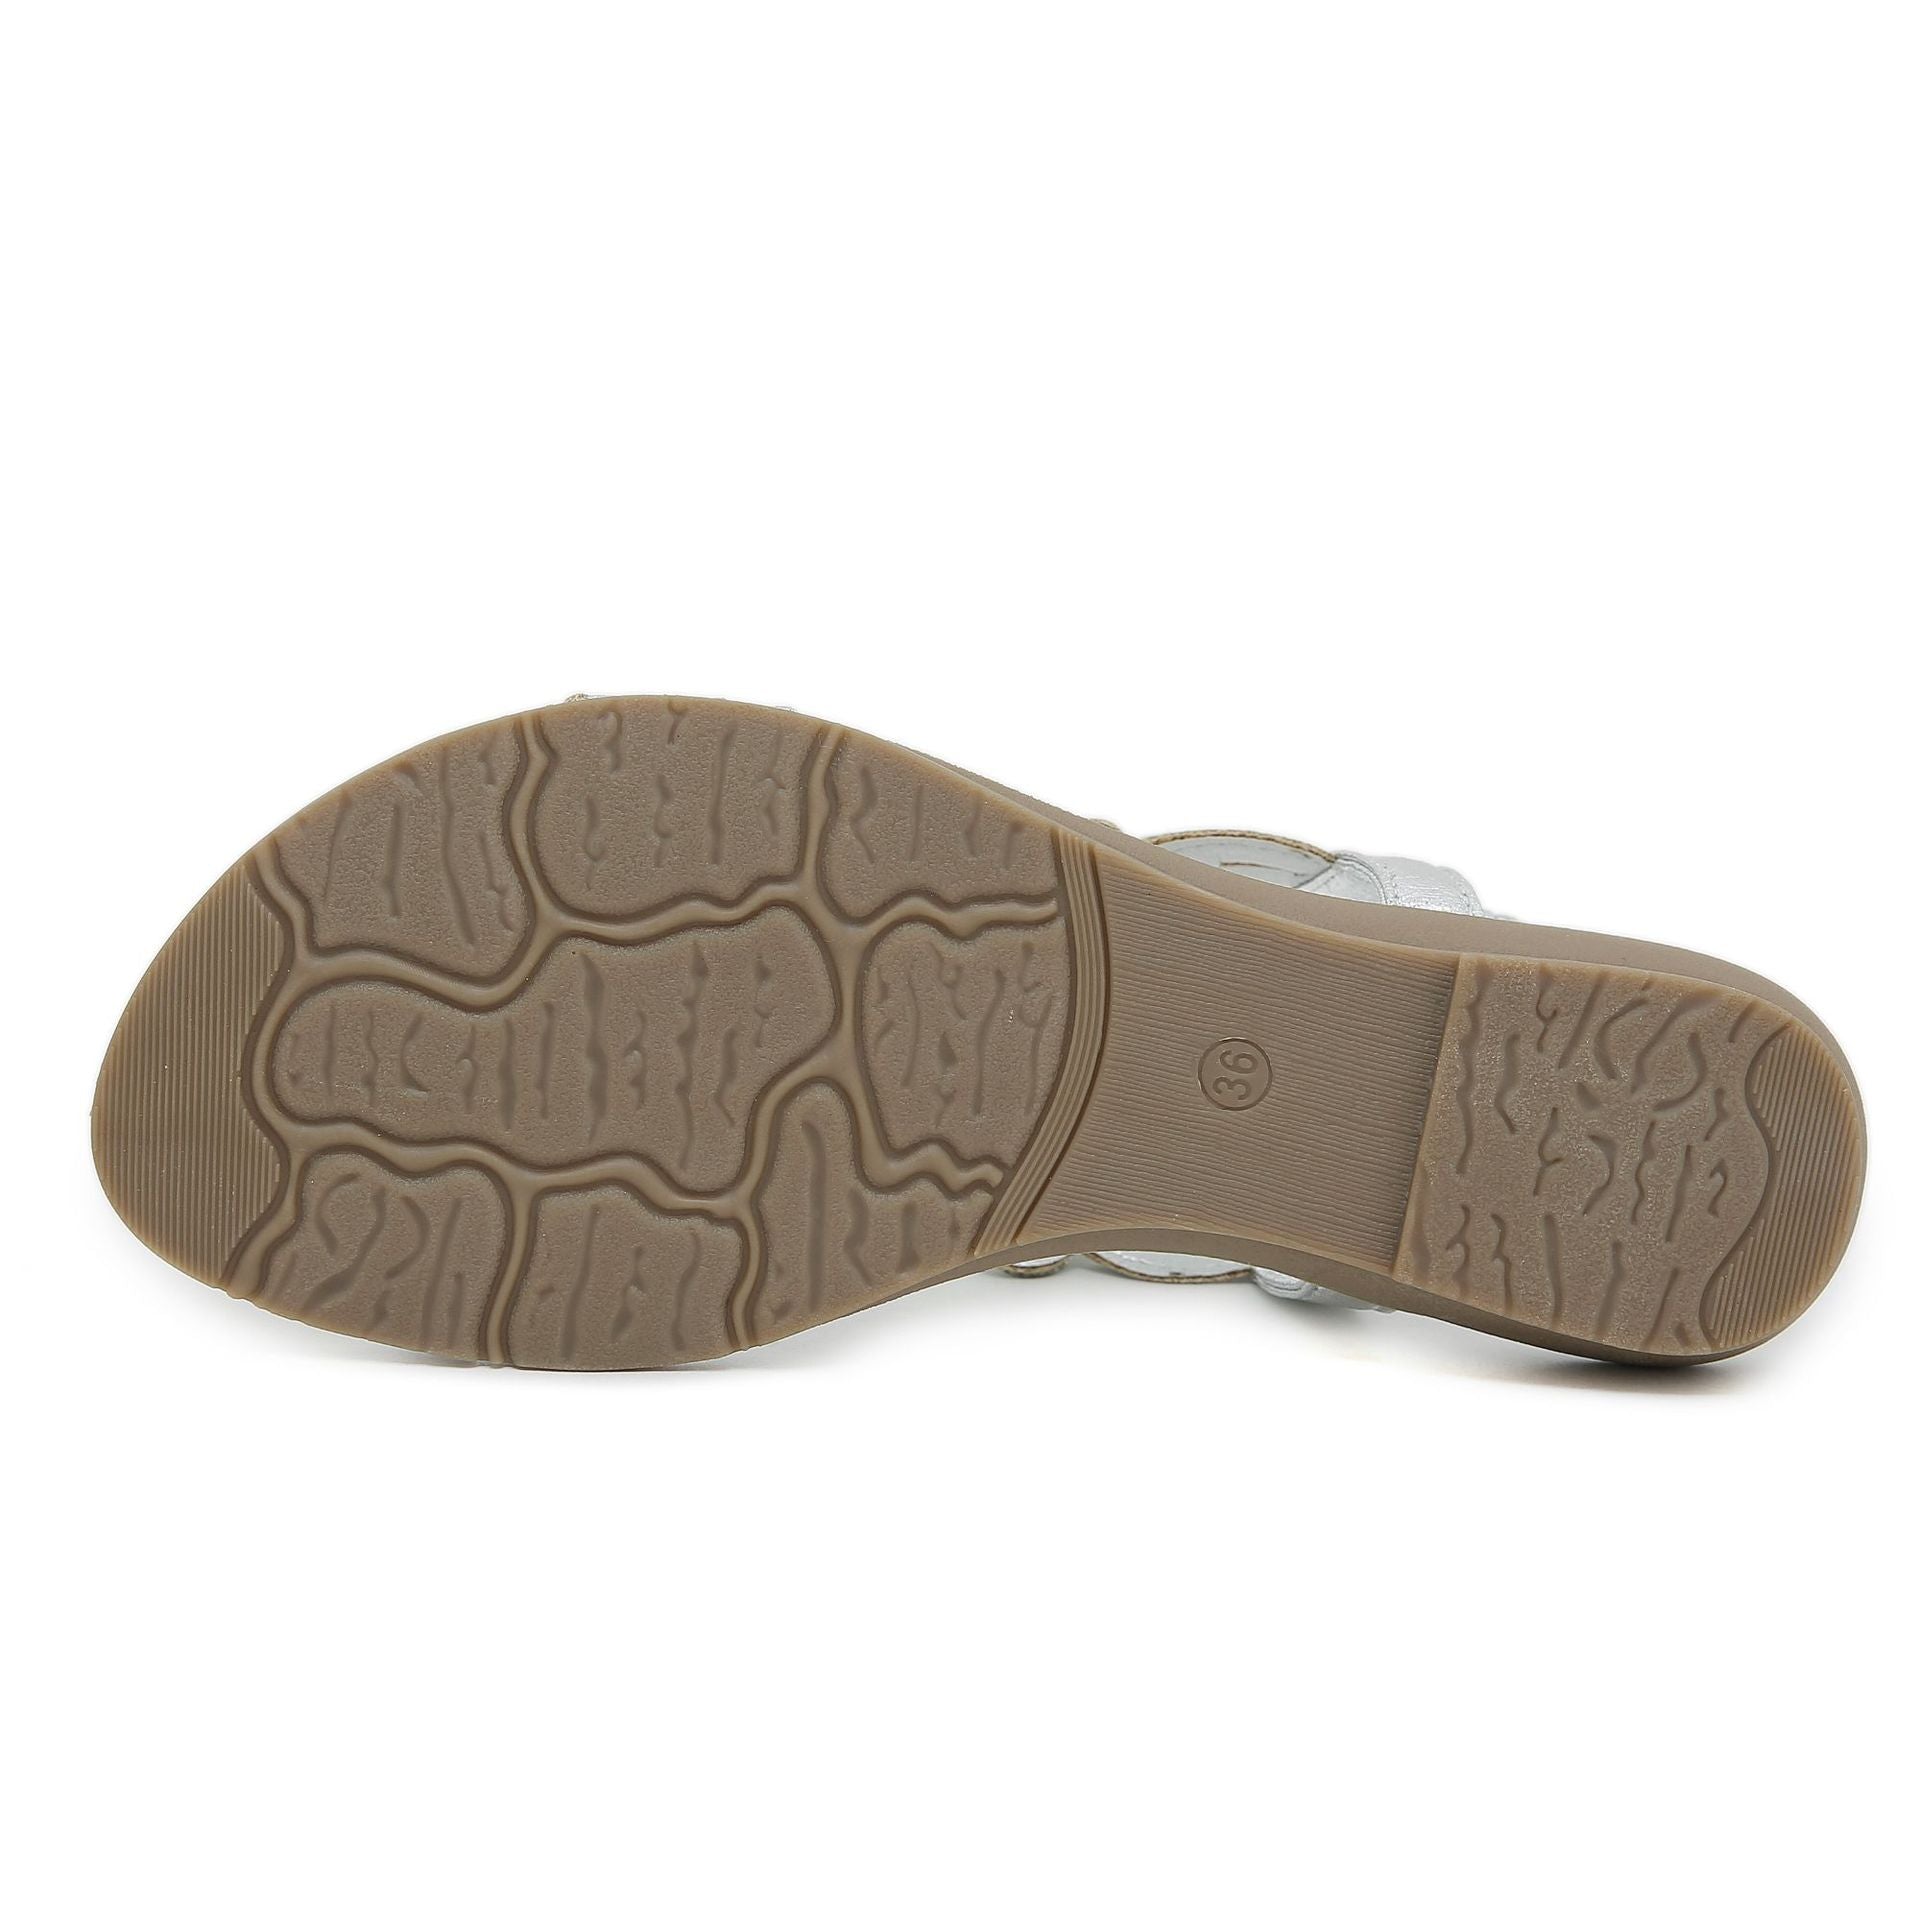 Owlkay Comfortable Versatile Flat Sandals